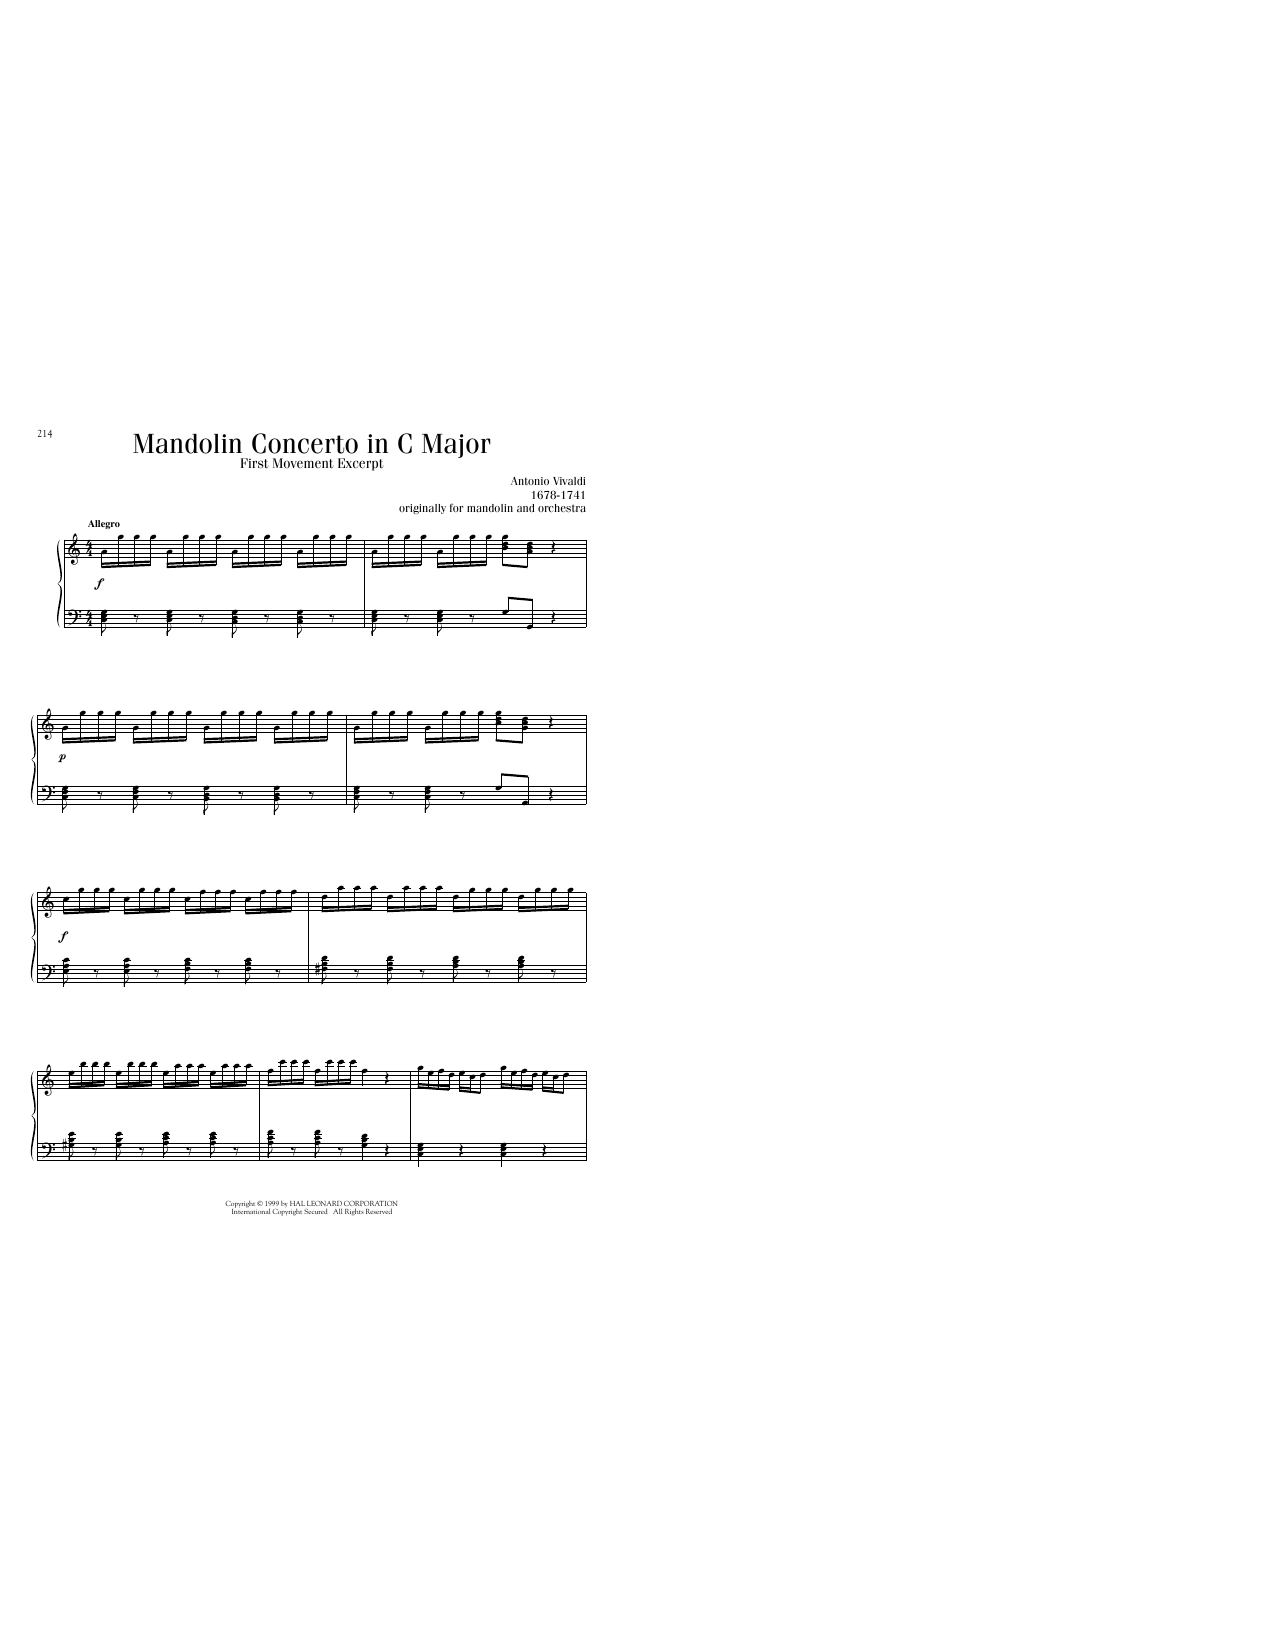 Antonio Vivaldi Mandolin Concerto in C Major Sheet Music Notes & Chords for Piano Solo - Download or Print PDF